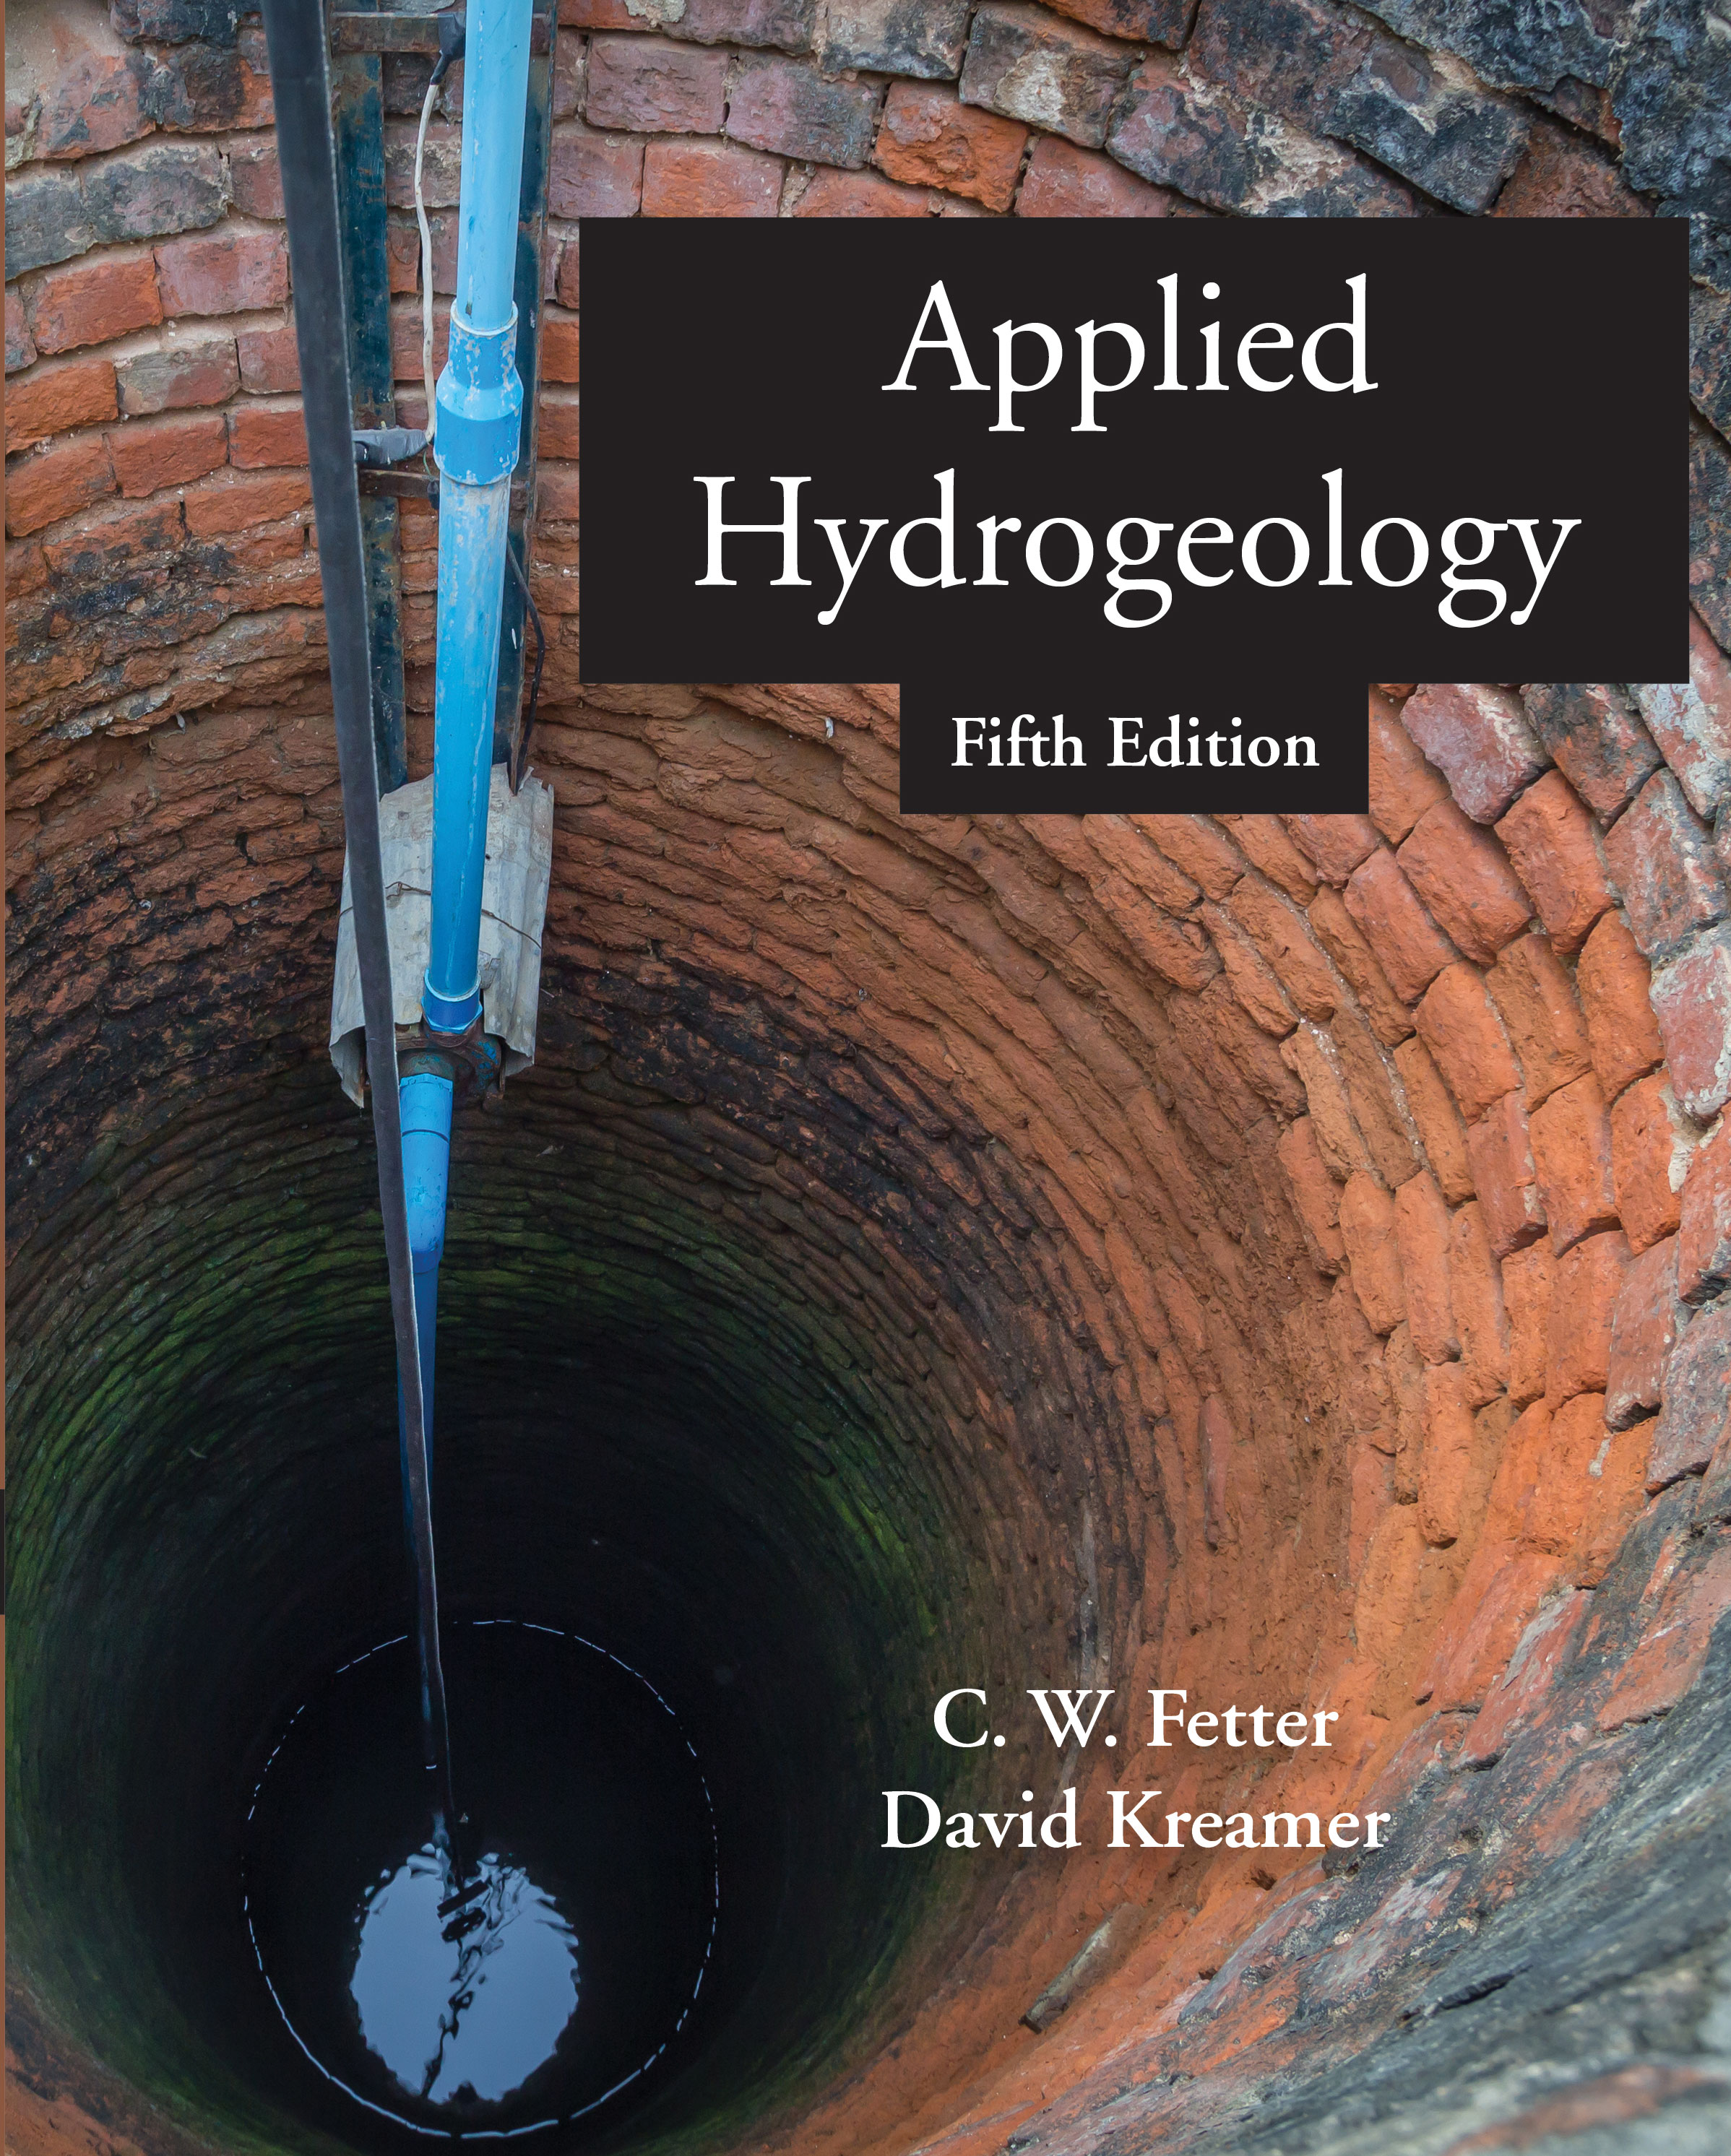 Applied Hydrogeology: Fifth Edition by C. W. Fetter, David  Kreamer